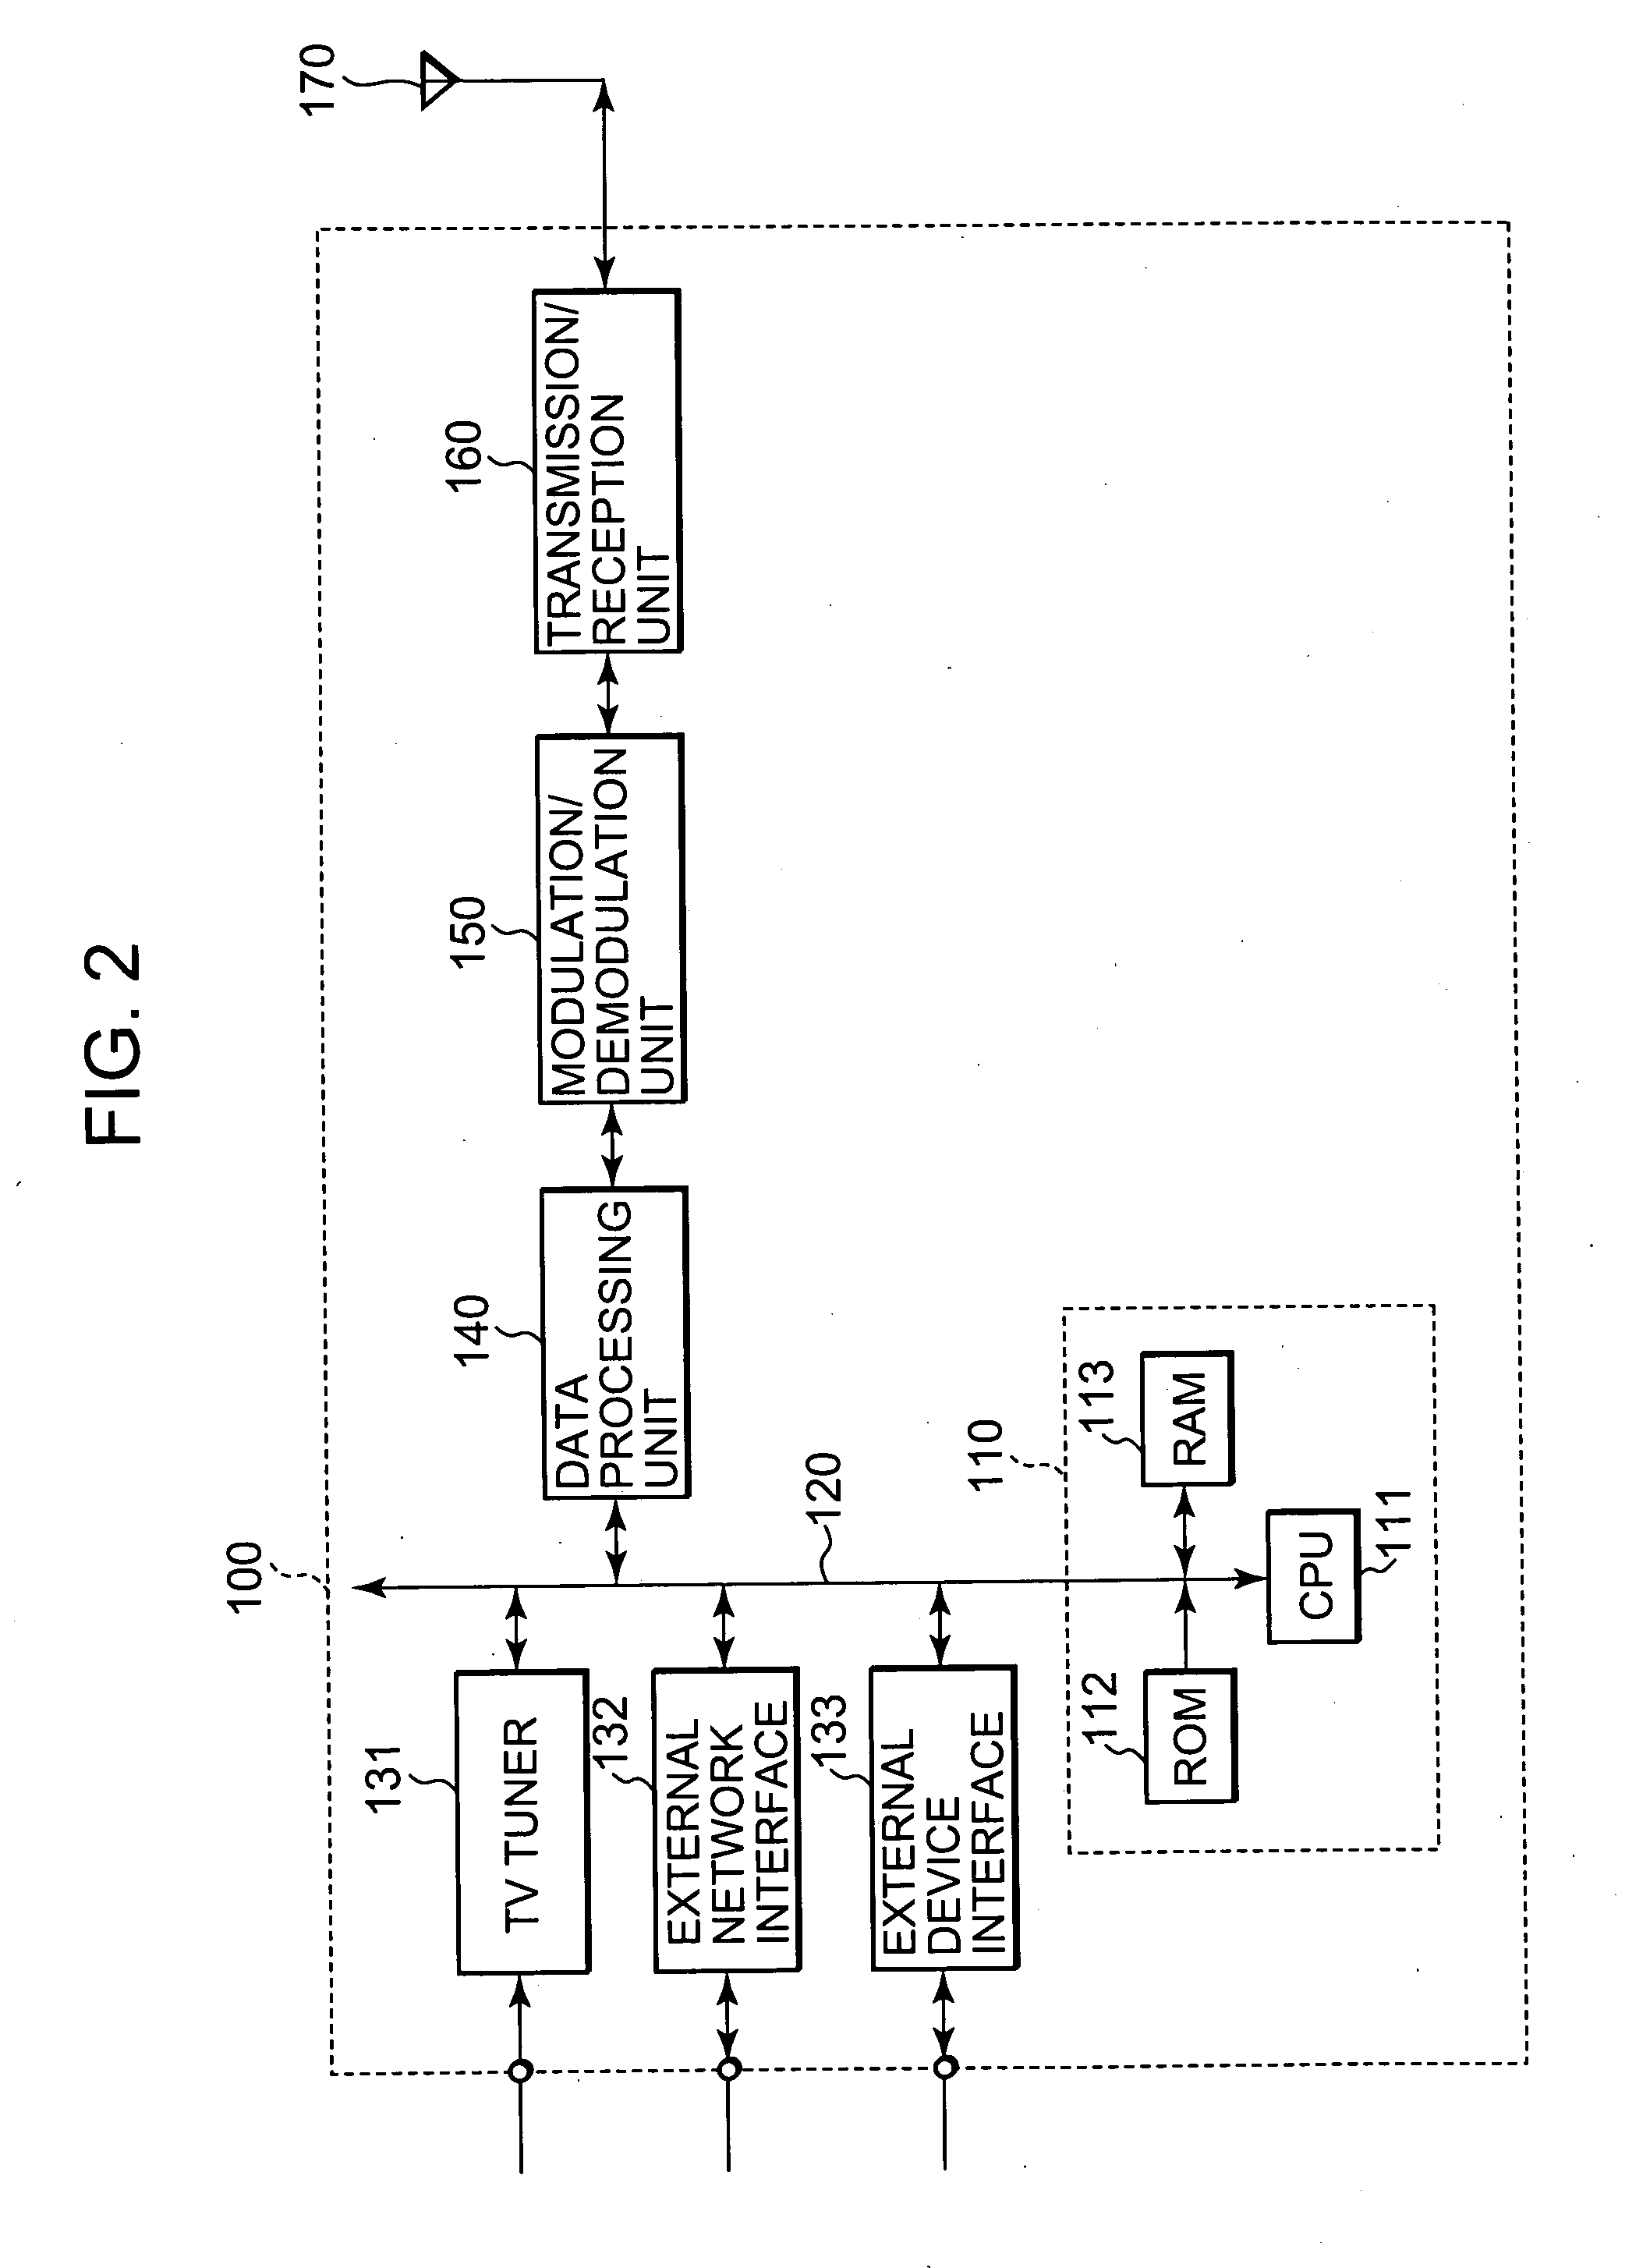 Base apparatus, monitor terminal and repeater apparatus